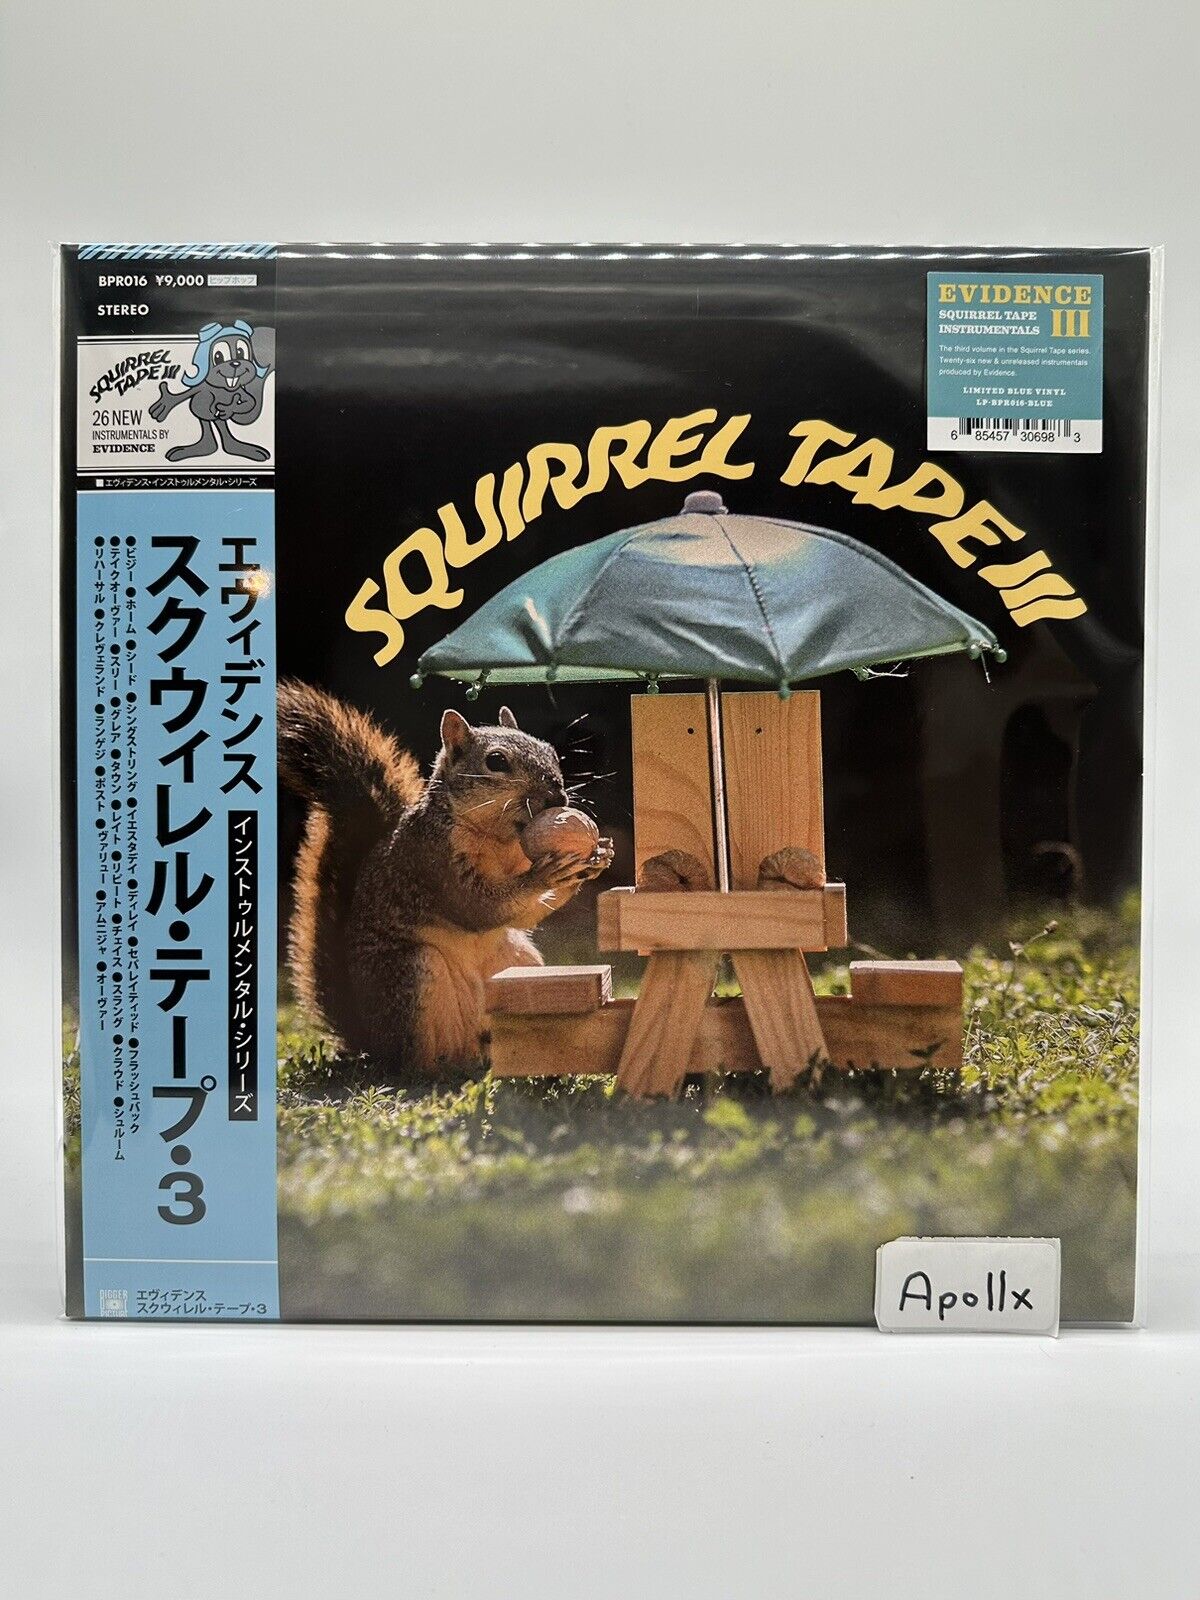 Evidence Squirrel Tape Instrumentals Volume 3 Sky Blue Vinyl LP OBI - Sealed ✅